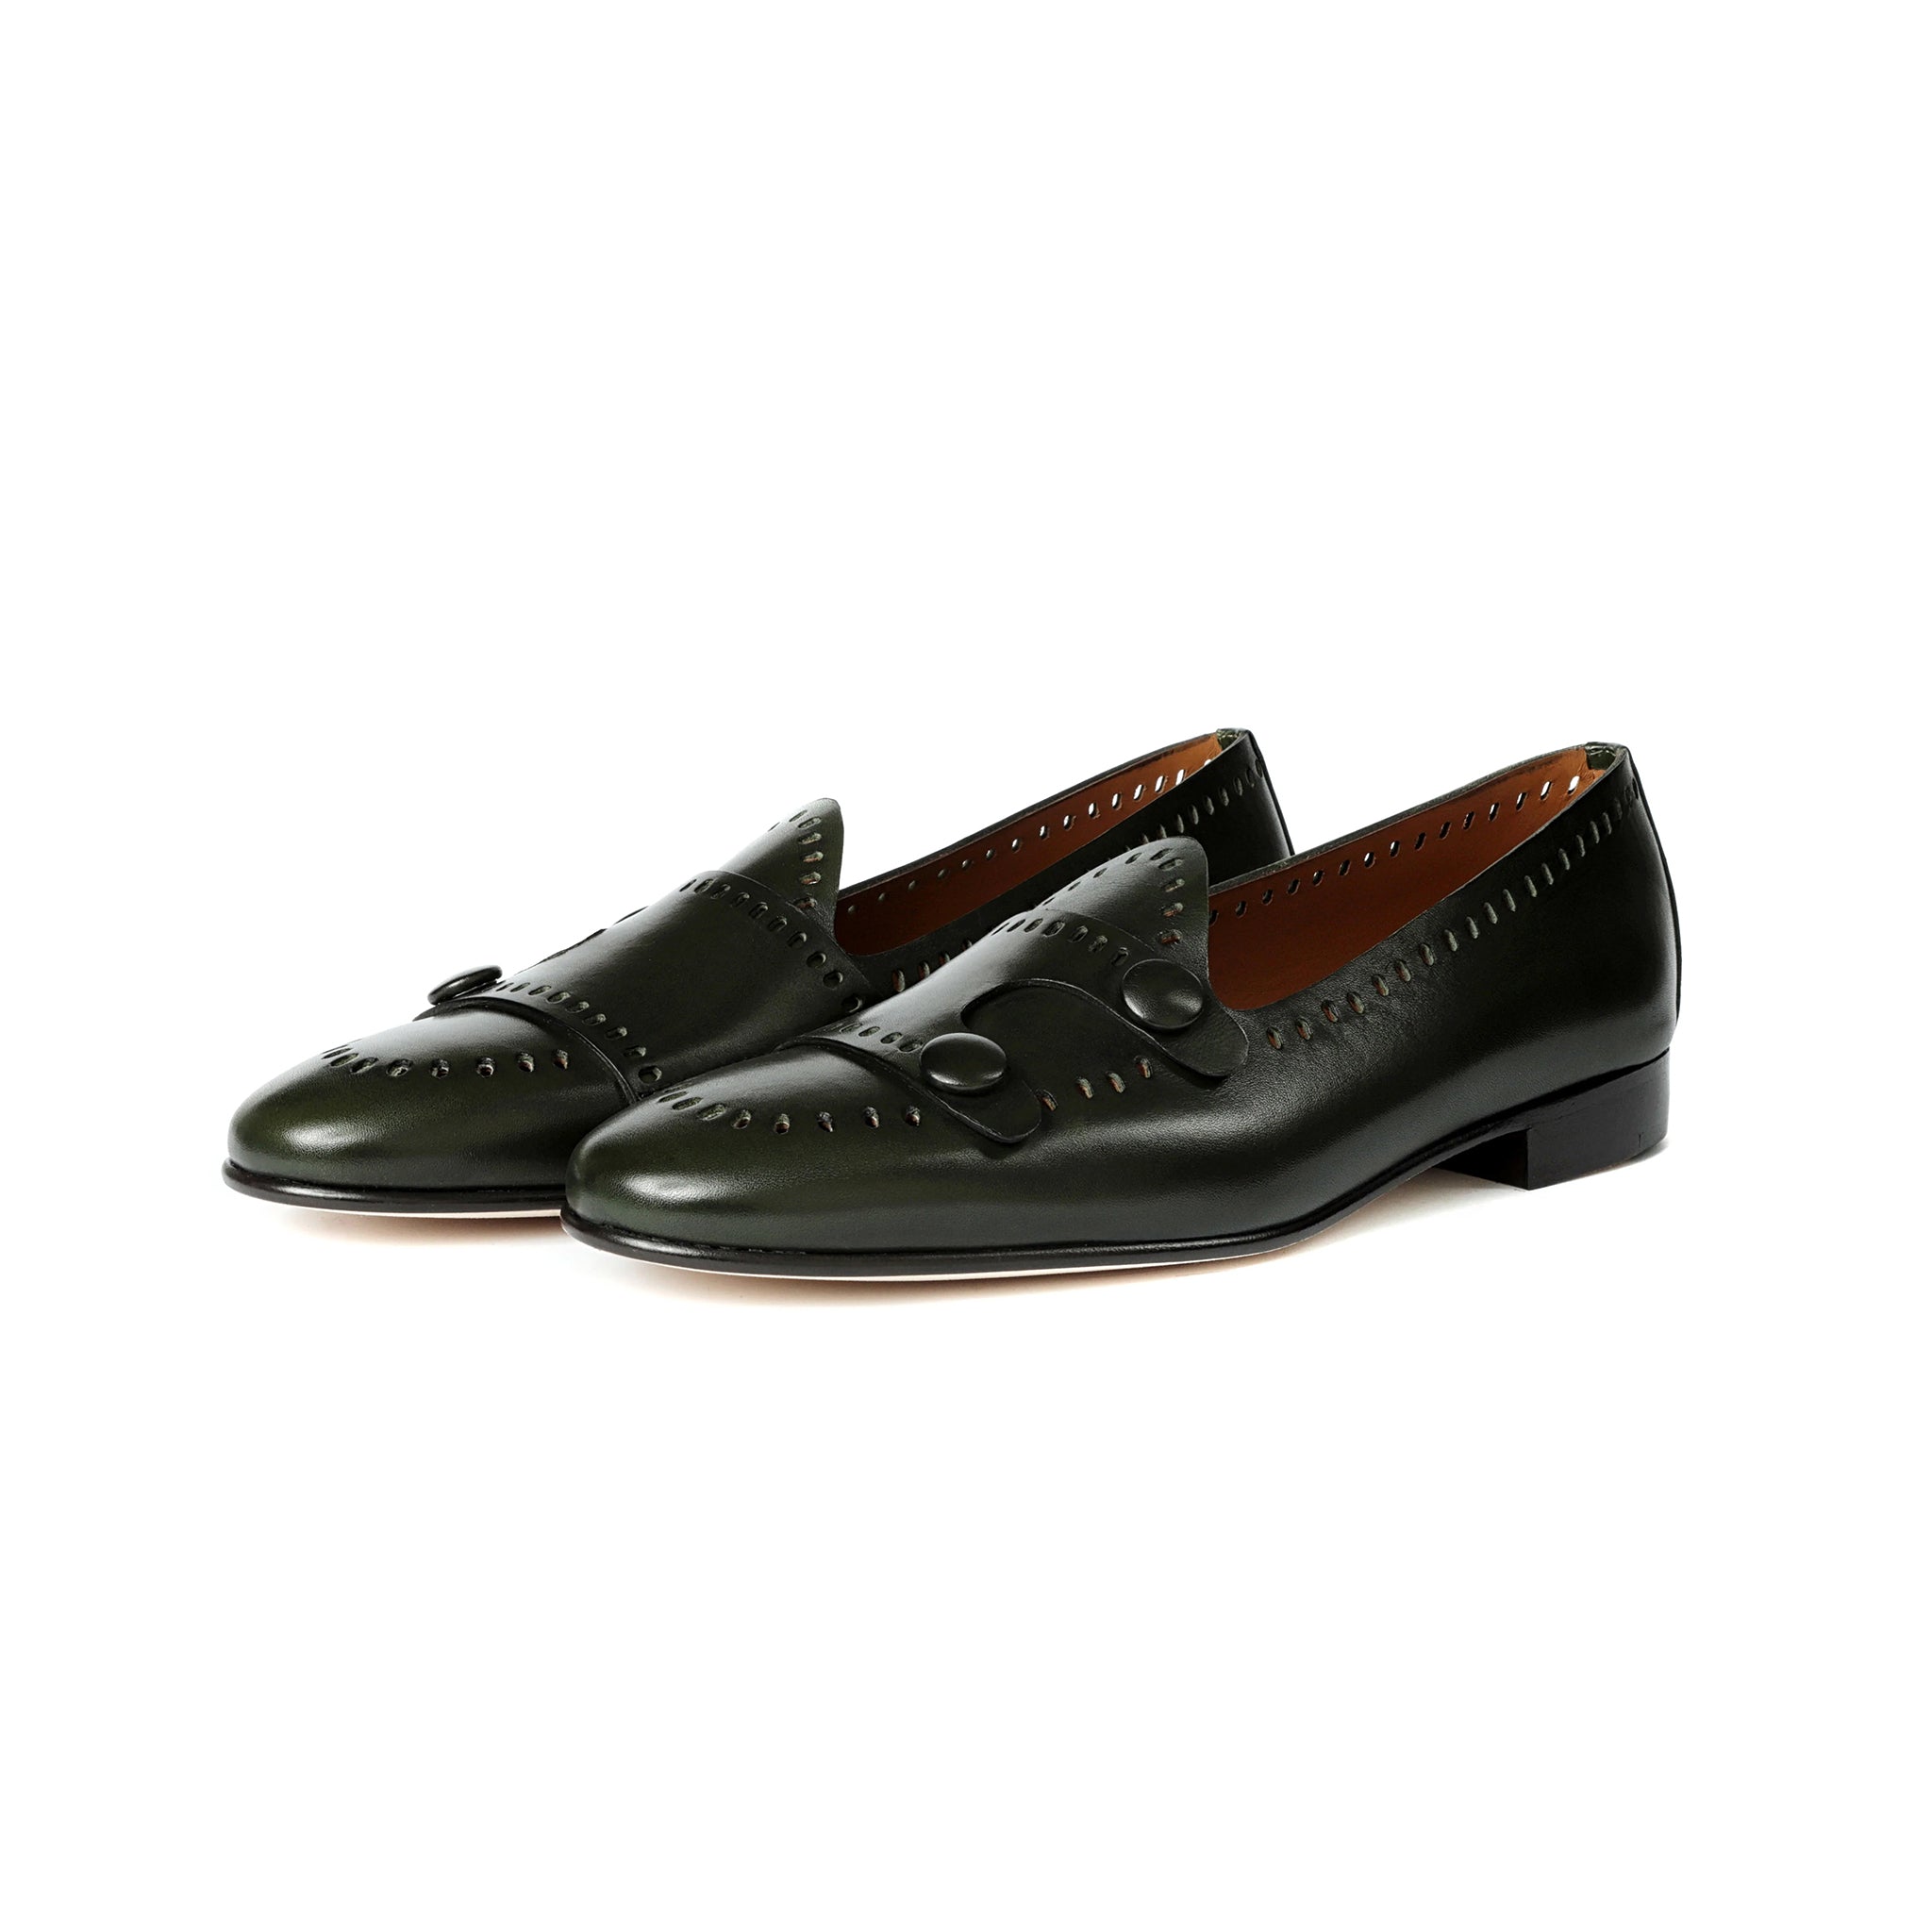 ALESSIO 105 – Jennifer Chamandi - British Luxury Footwear